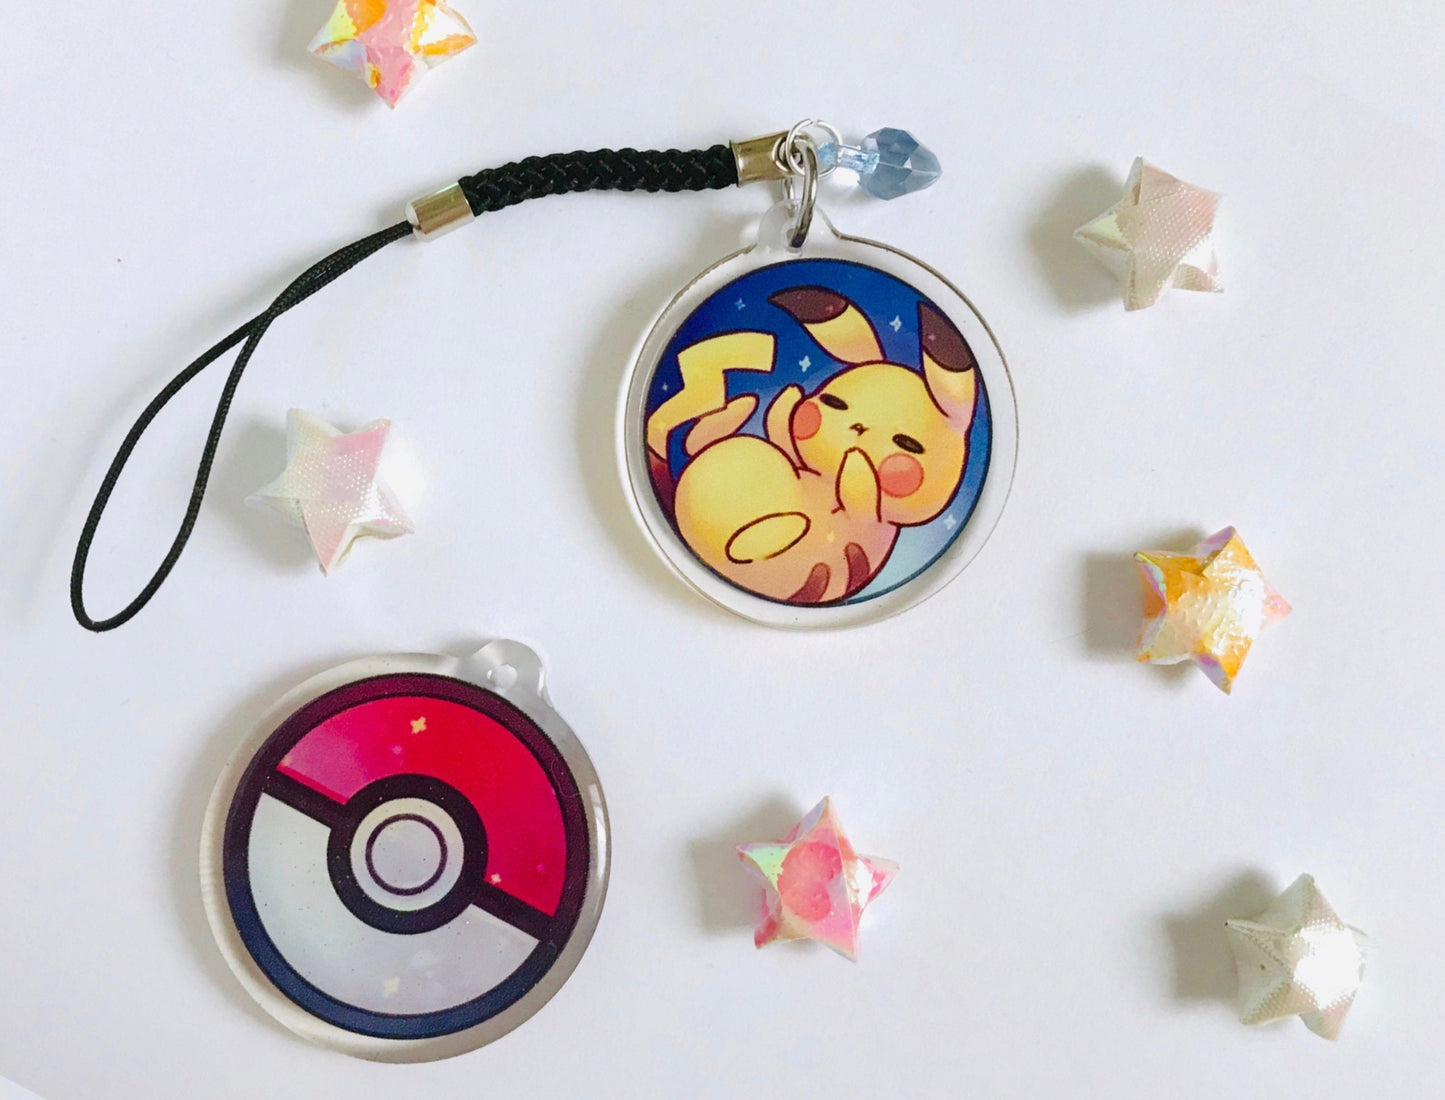 Pikachu in a pokeball keychain